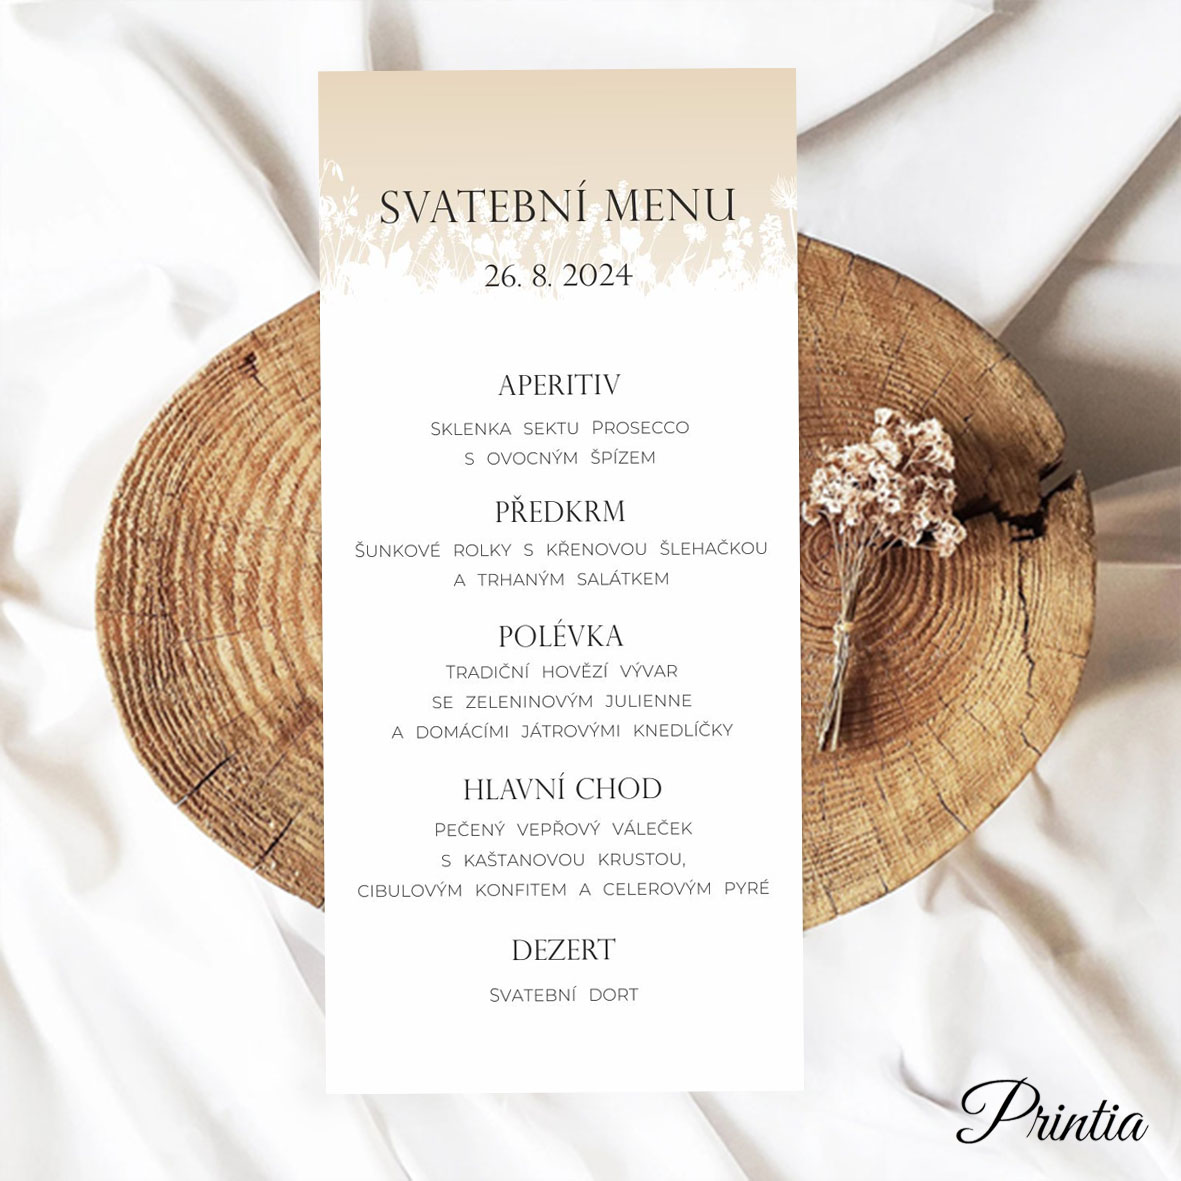 Wedding menu with wildflowers outlines